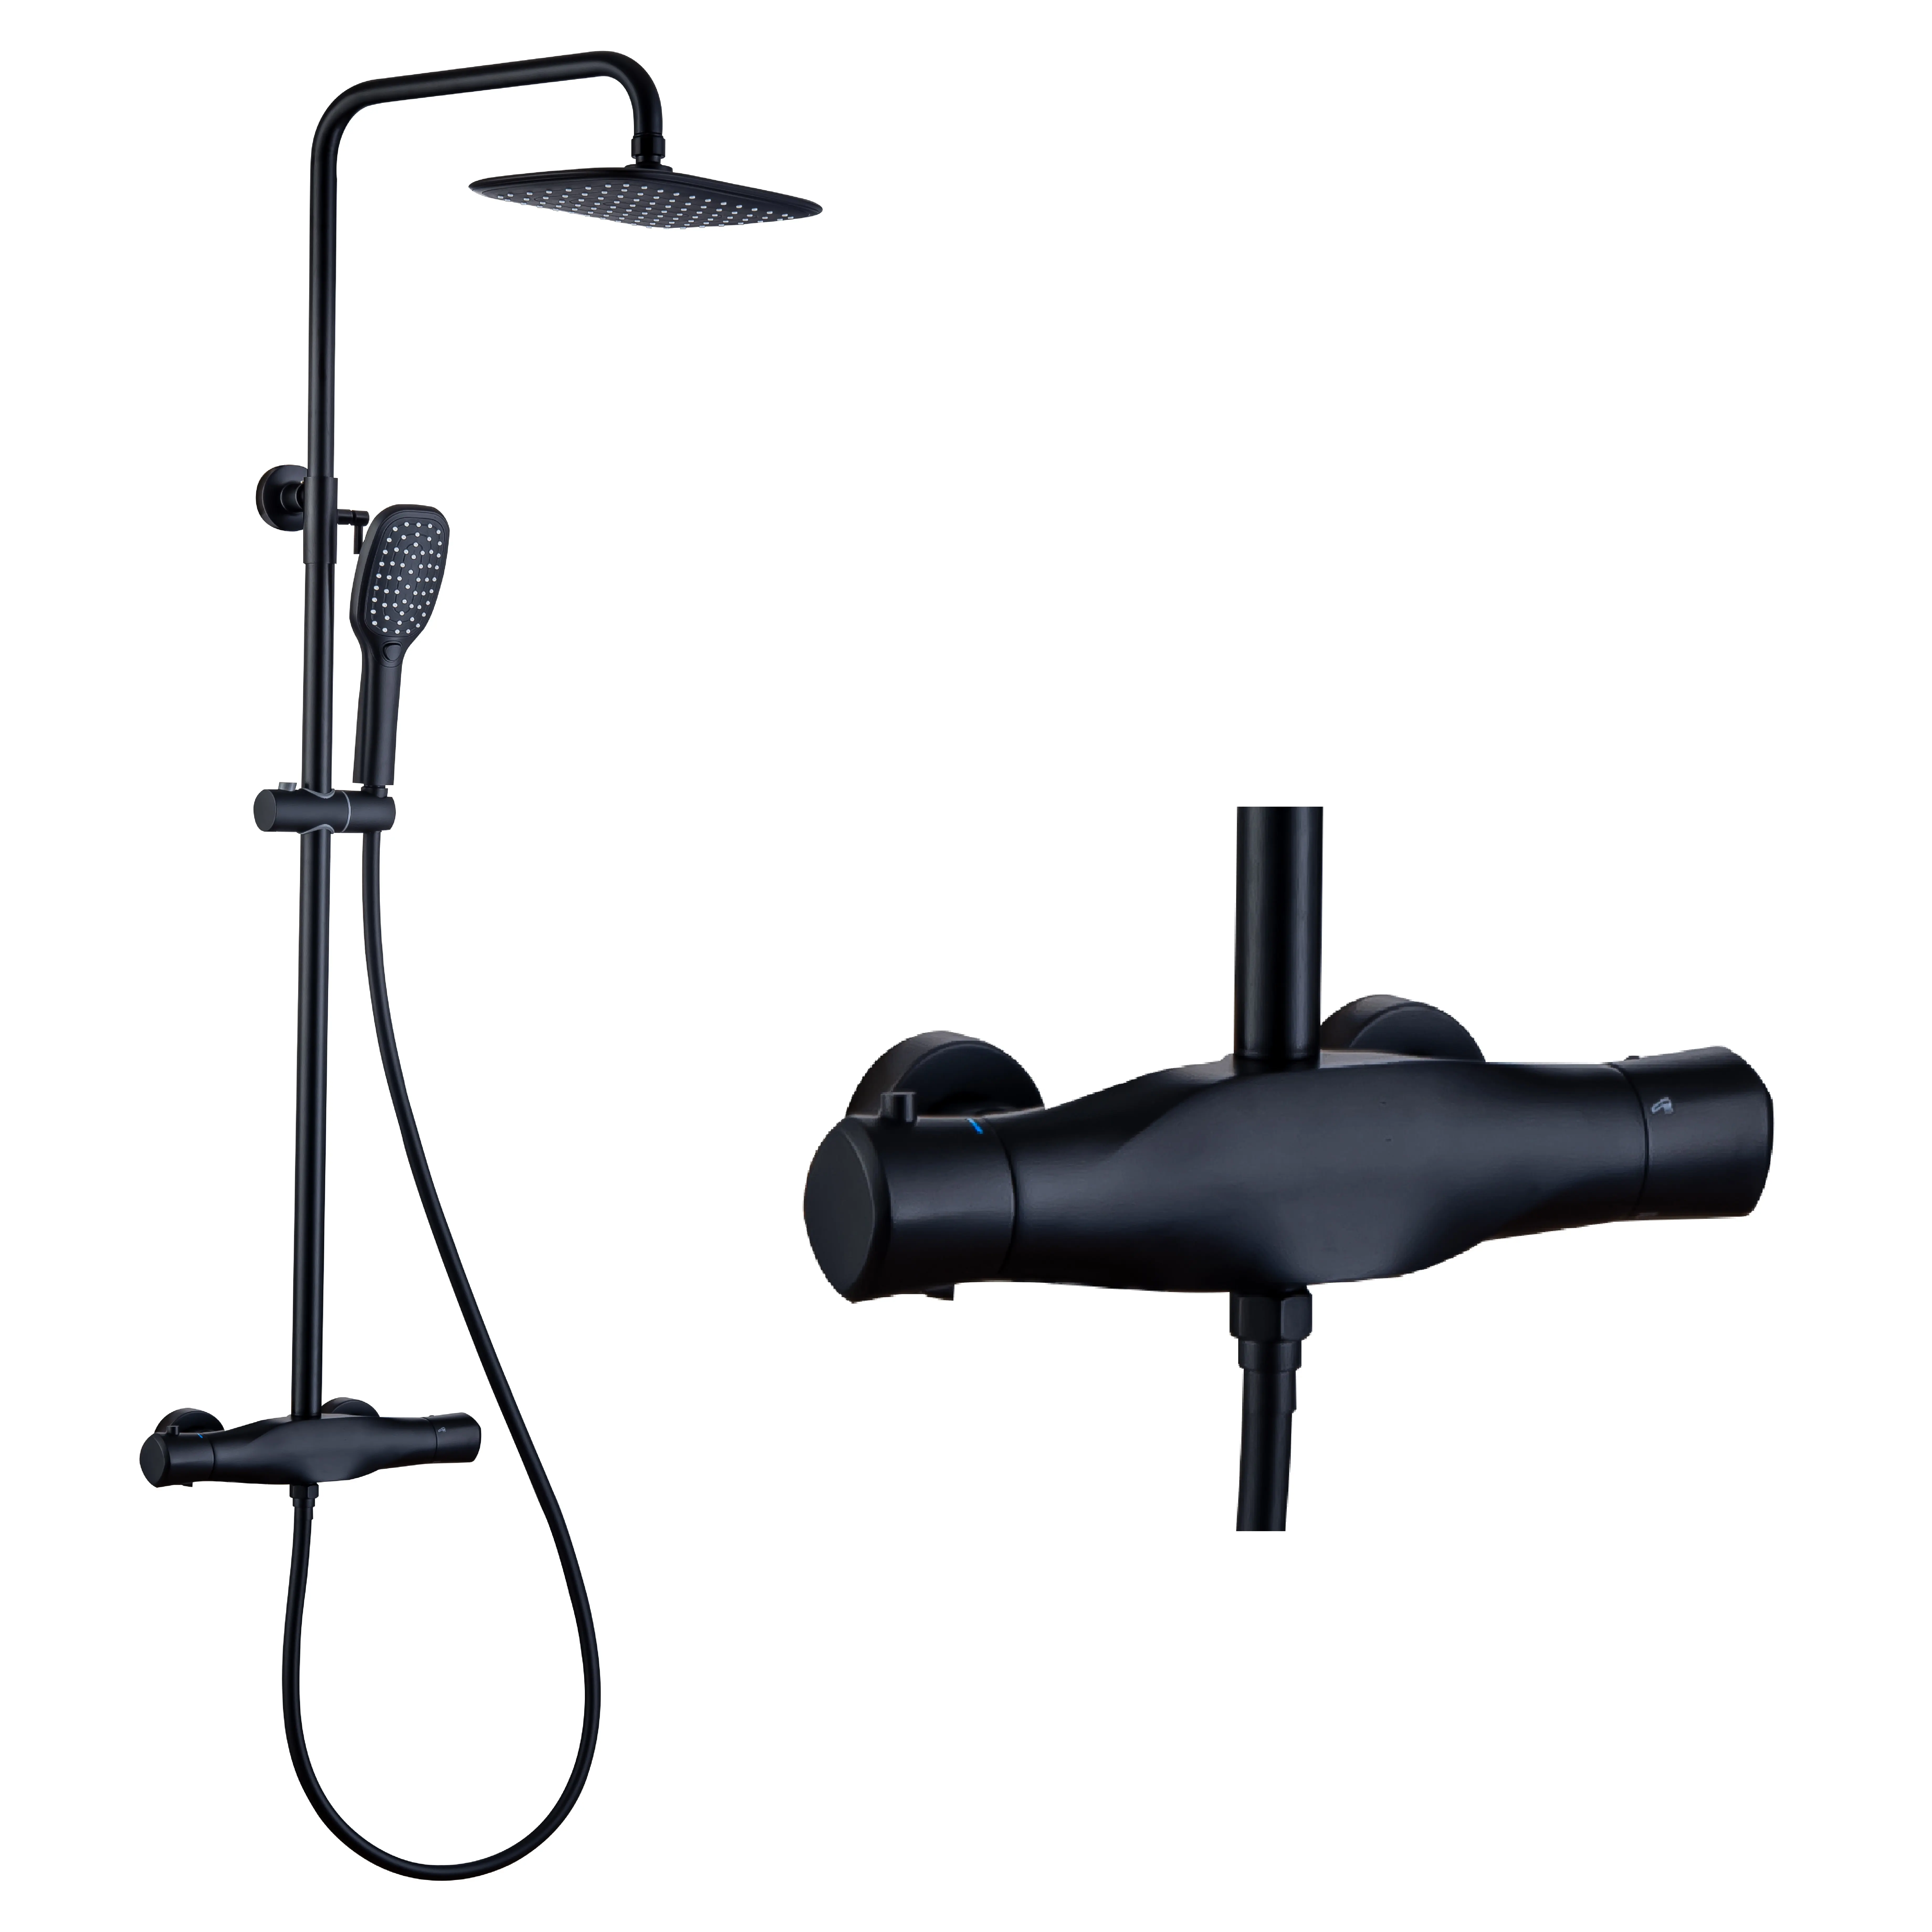 Matte Black European Thermostatic Rain Shower Mixer Faucet Set Tap Waterfall Taps robinet thermostatique douche